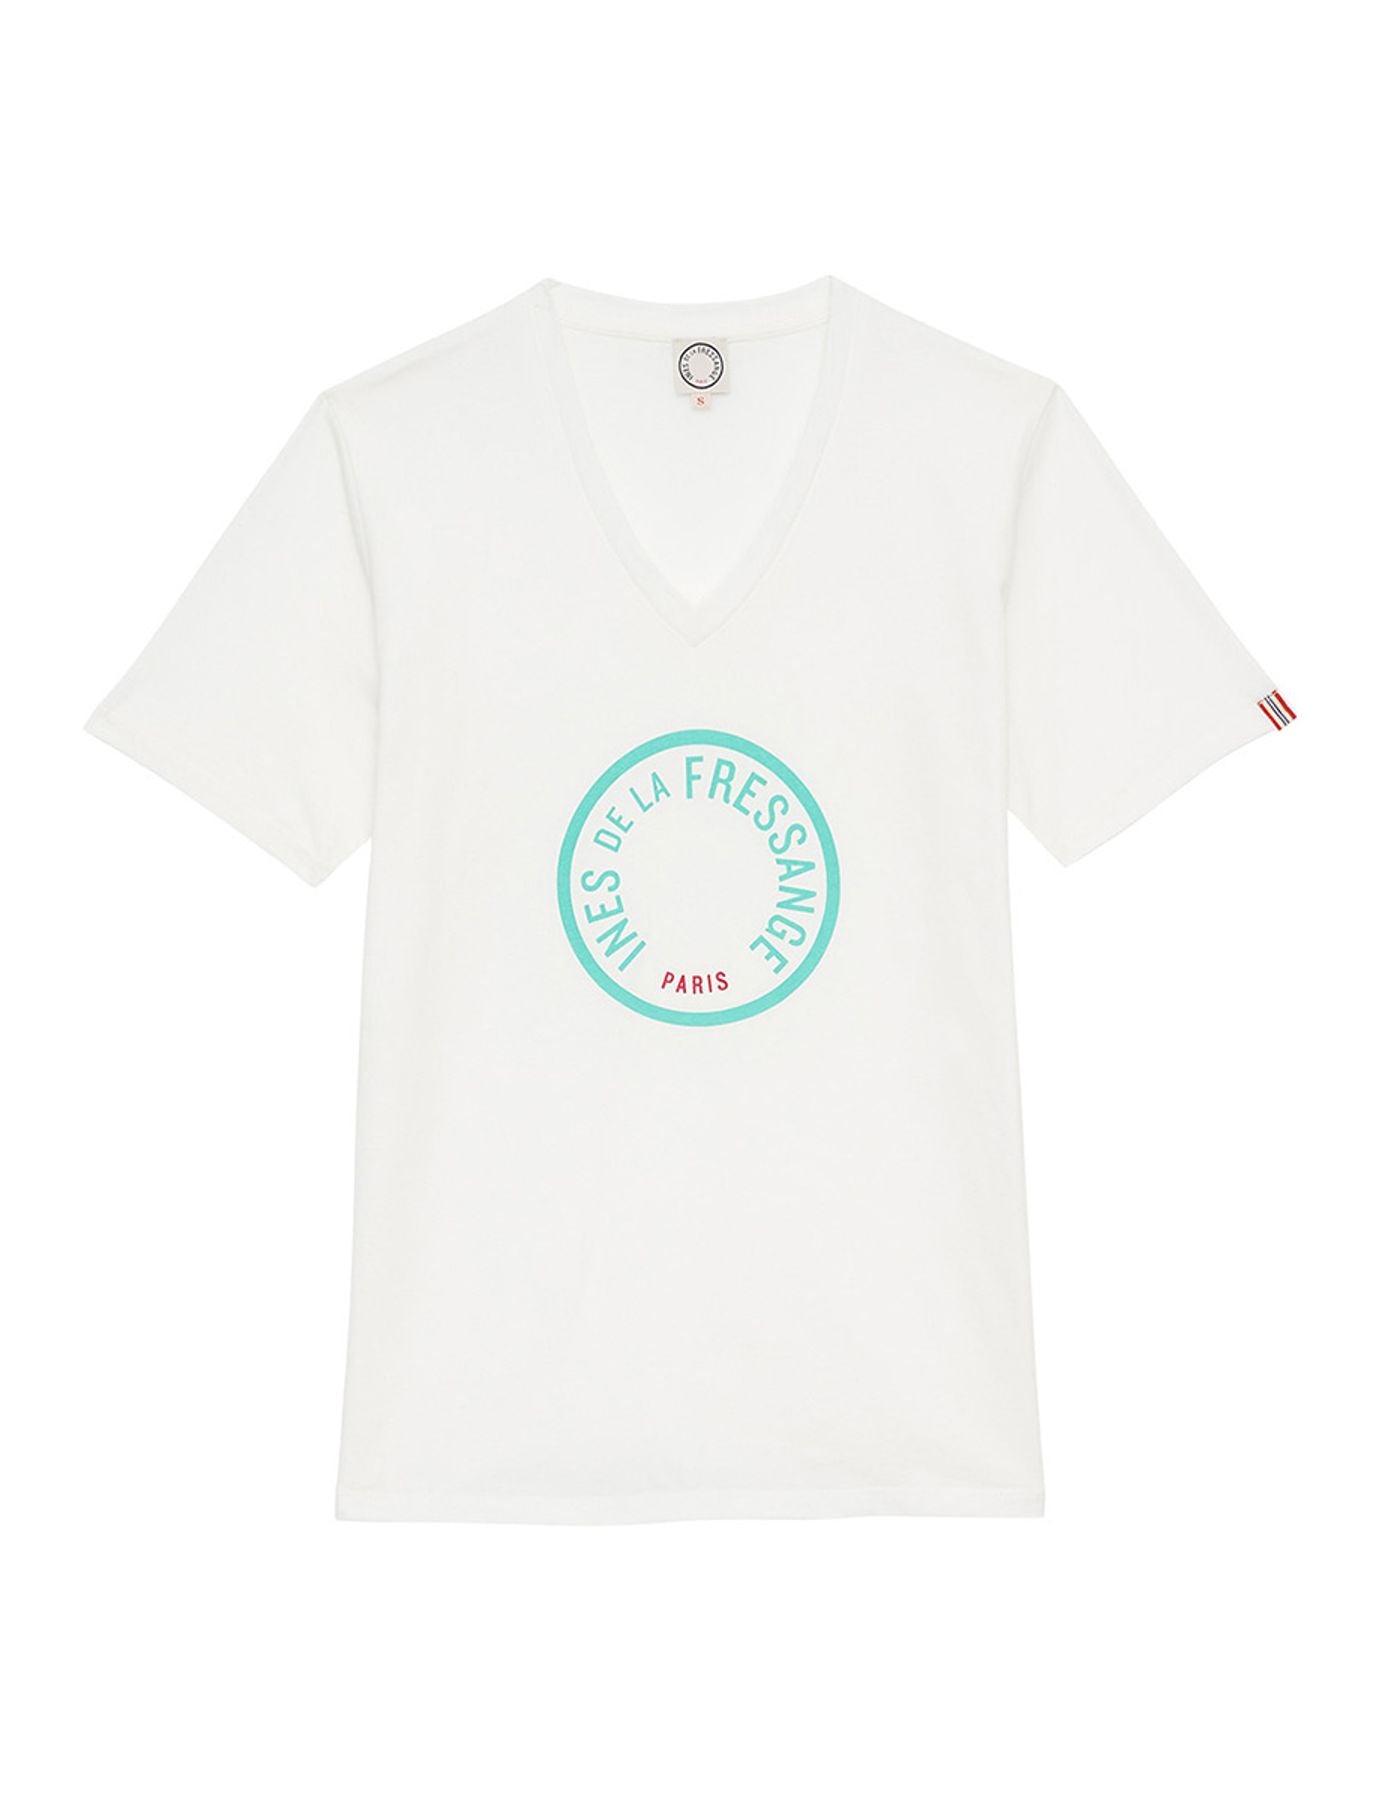 tee-shirt-pia-white-logo-turquoise